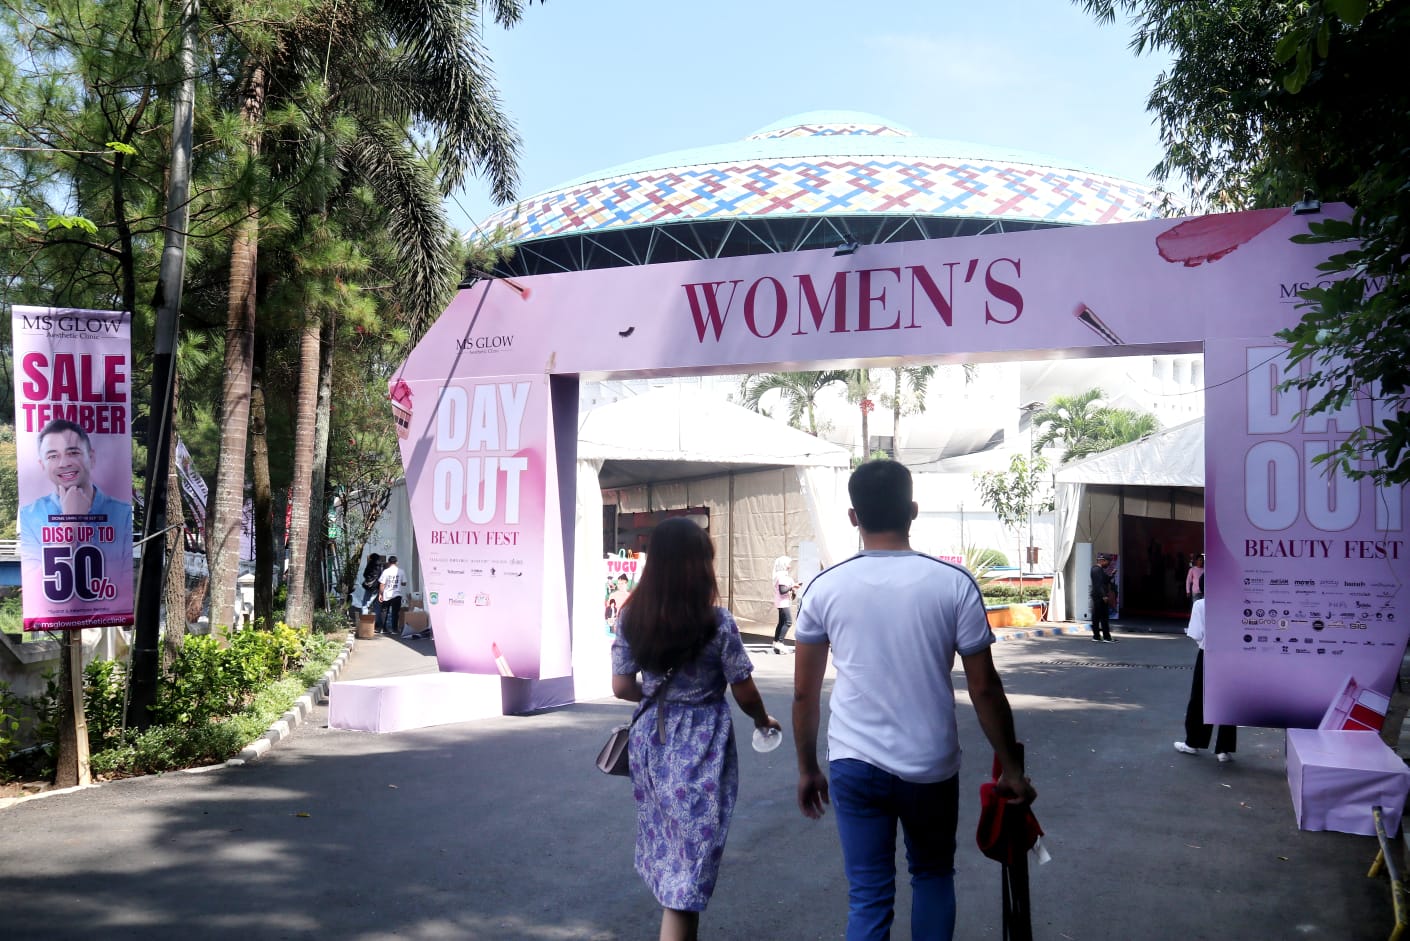 Pintu gerbang menuju acara Women’s Day Out (WDO). 